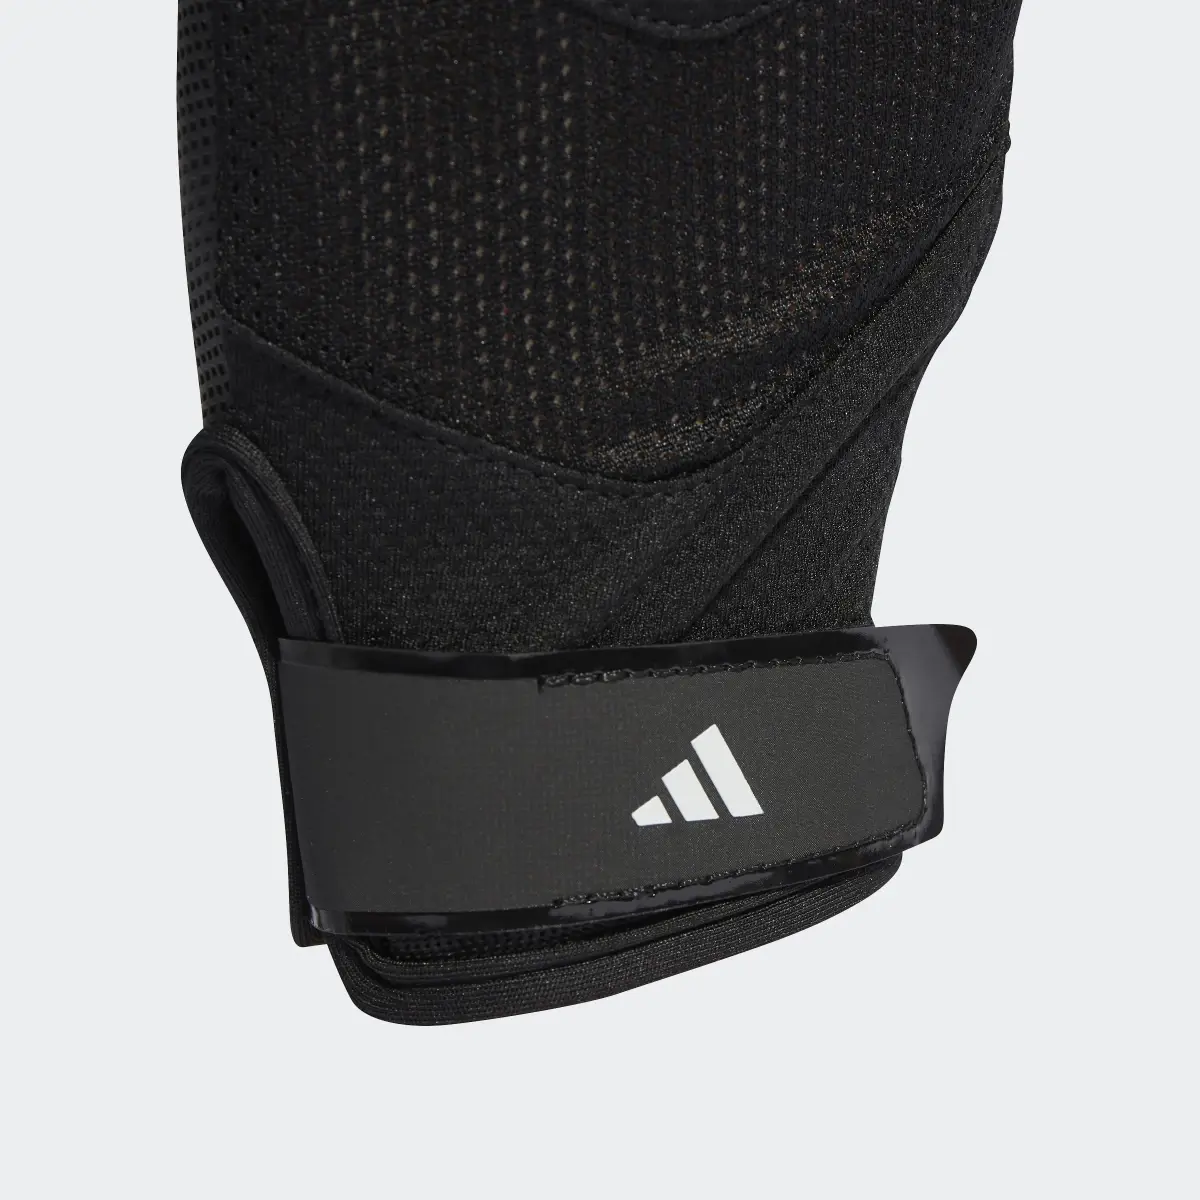 Adidas Training Gloves. 3